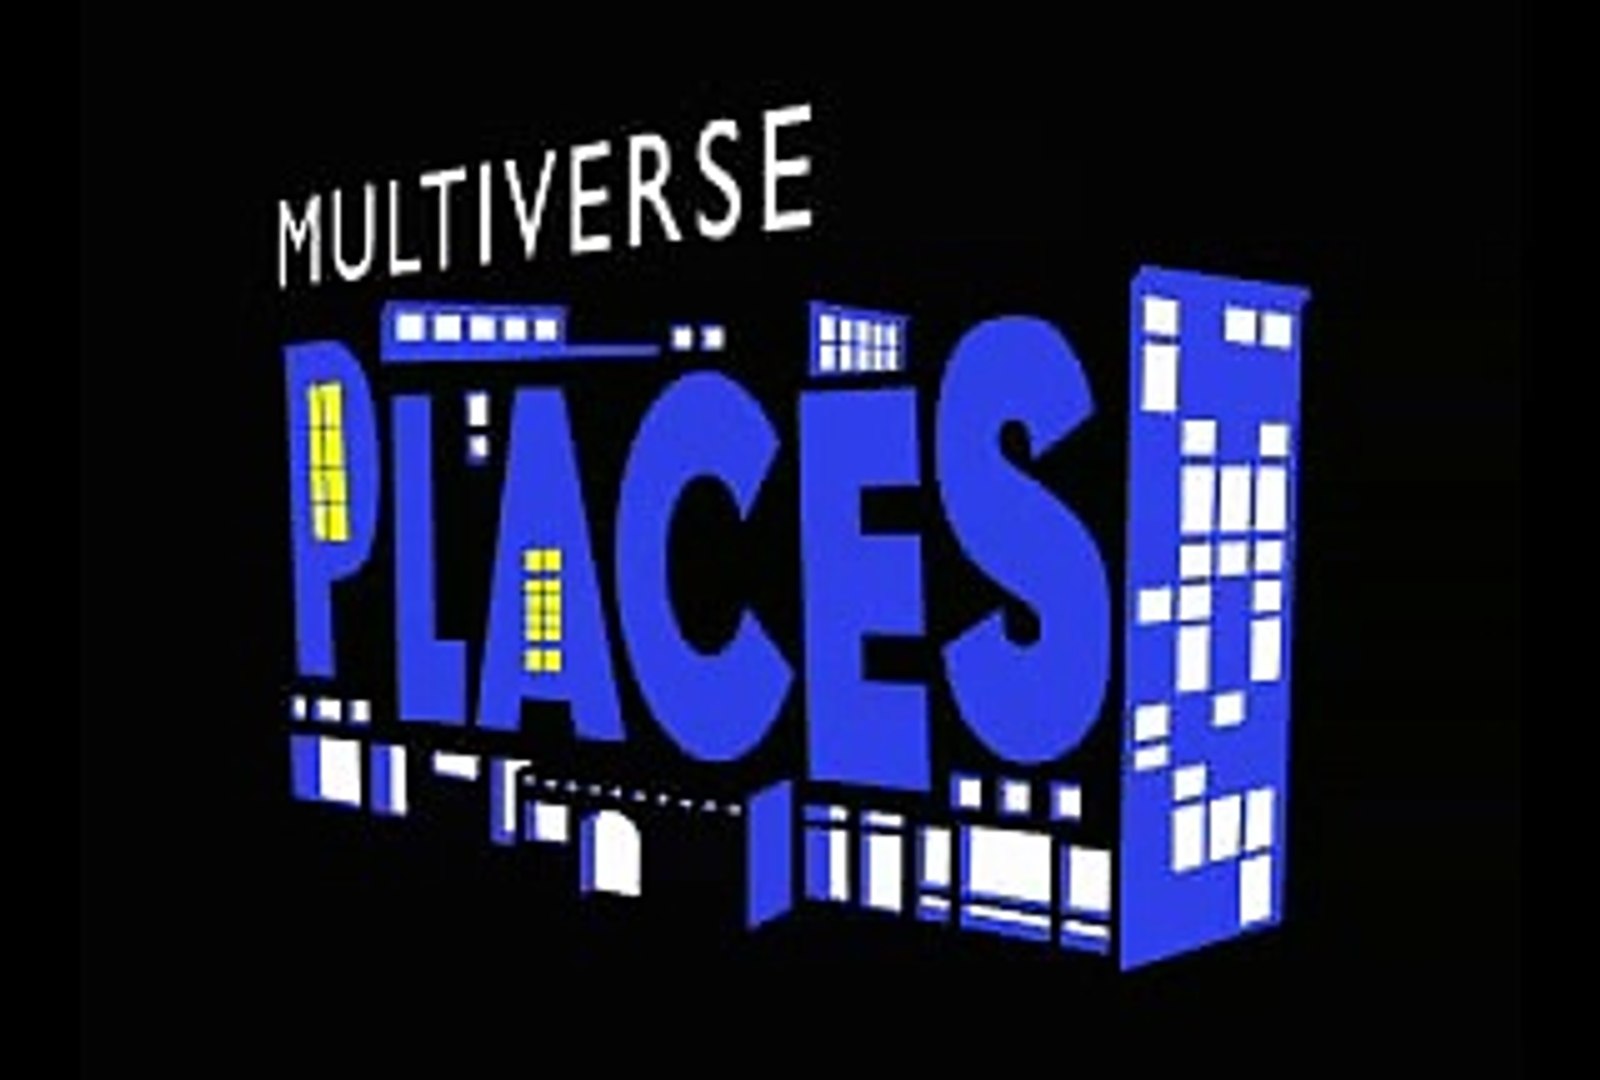 Multiverse Places